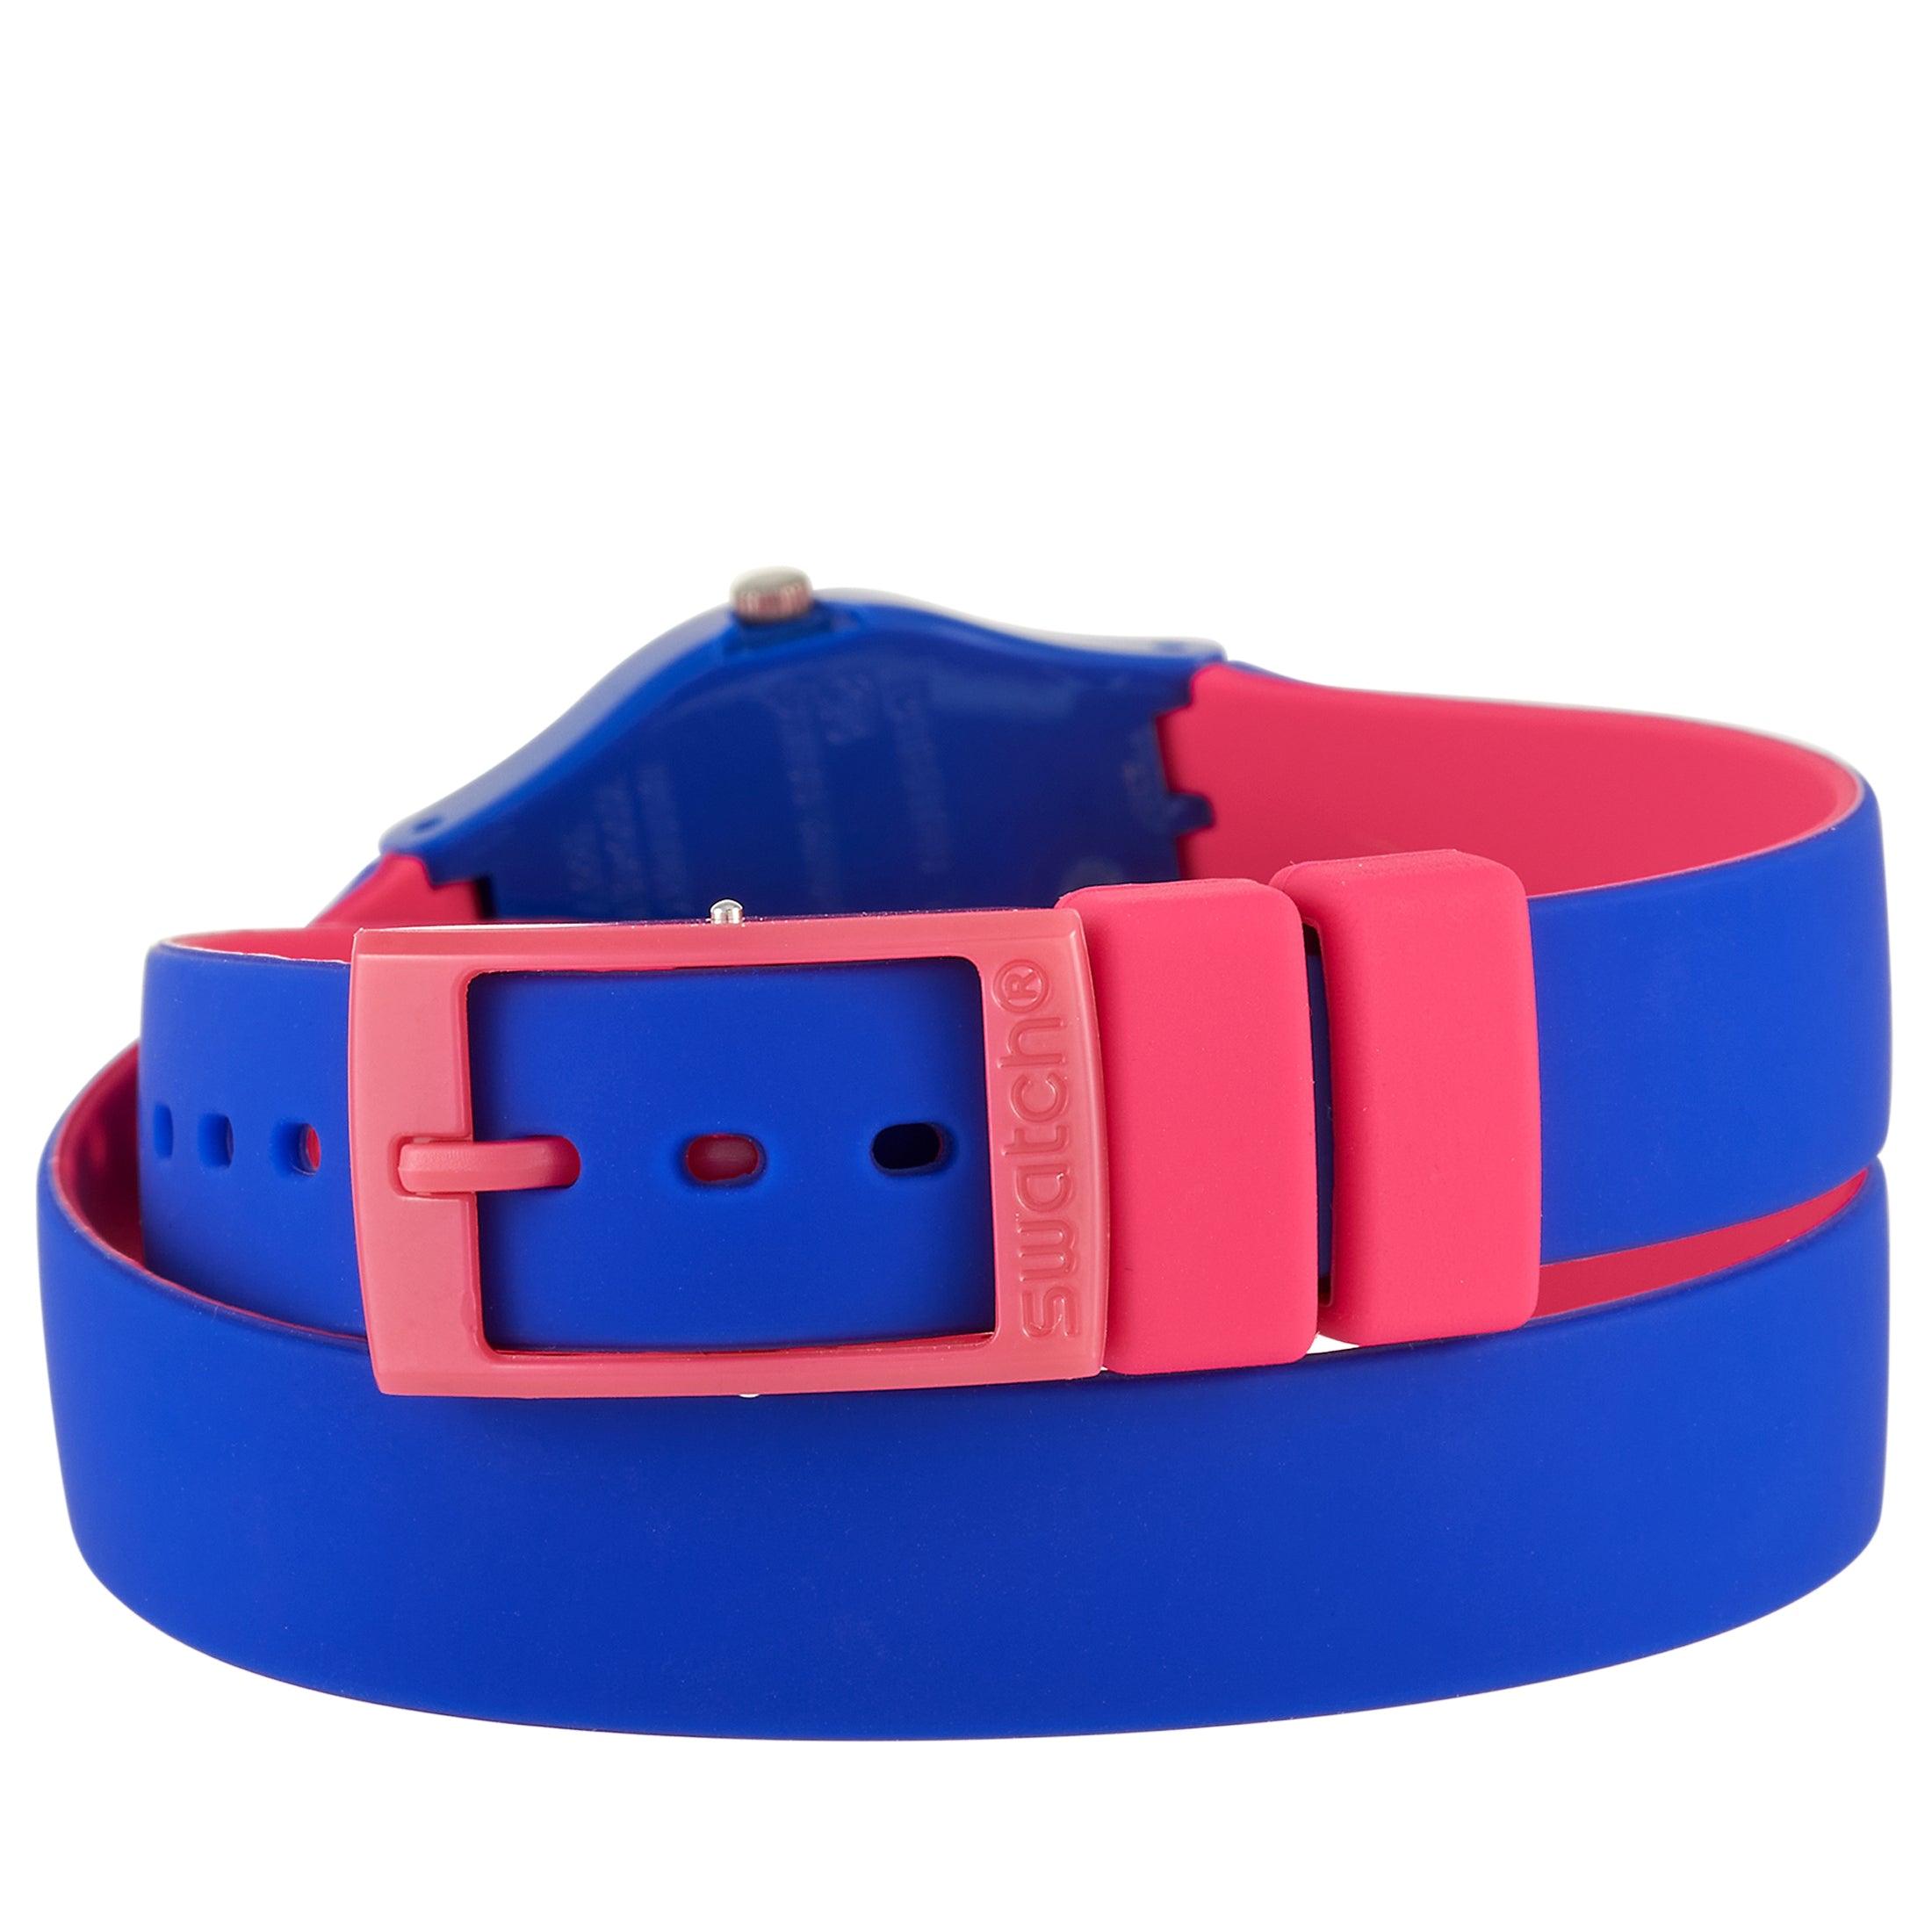 Swatch Biko Bloo Blue-pink Double Wrap Ladies' Watch Ls115 | Lyst